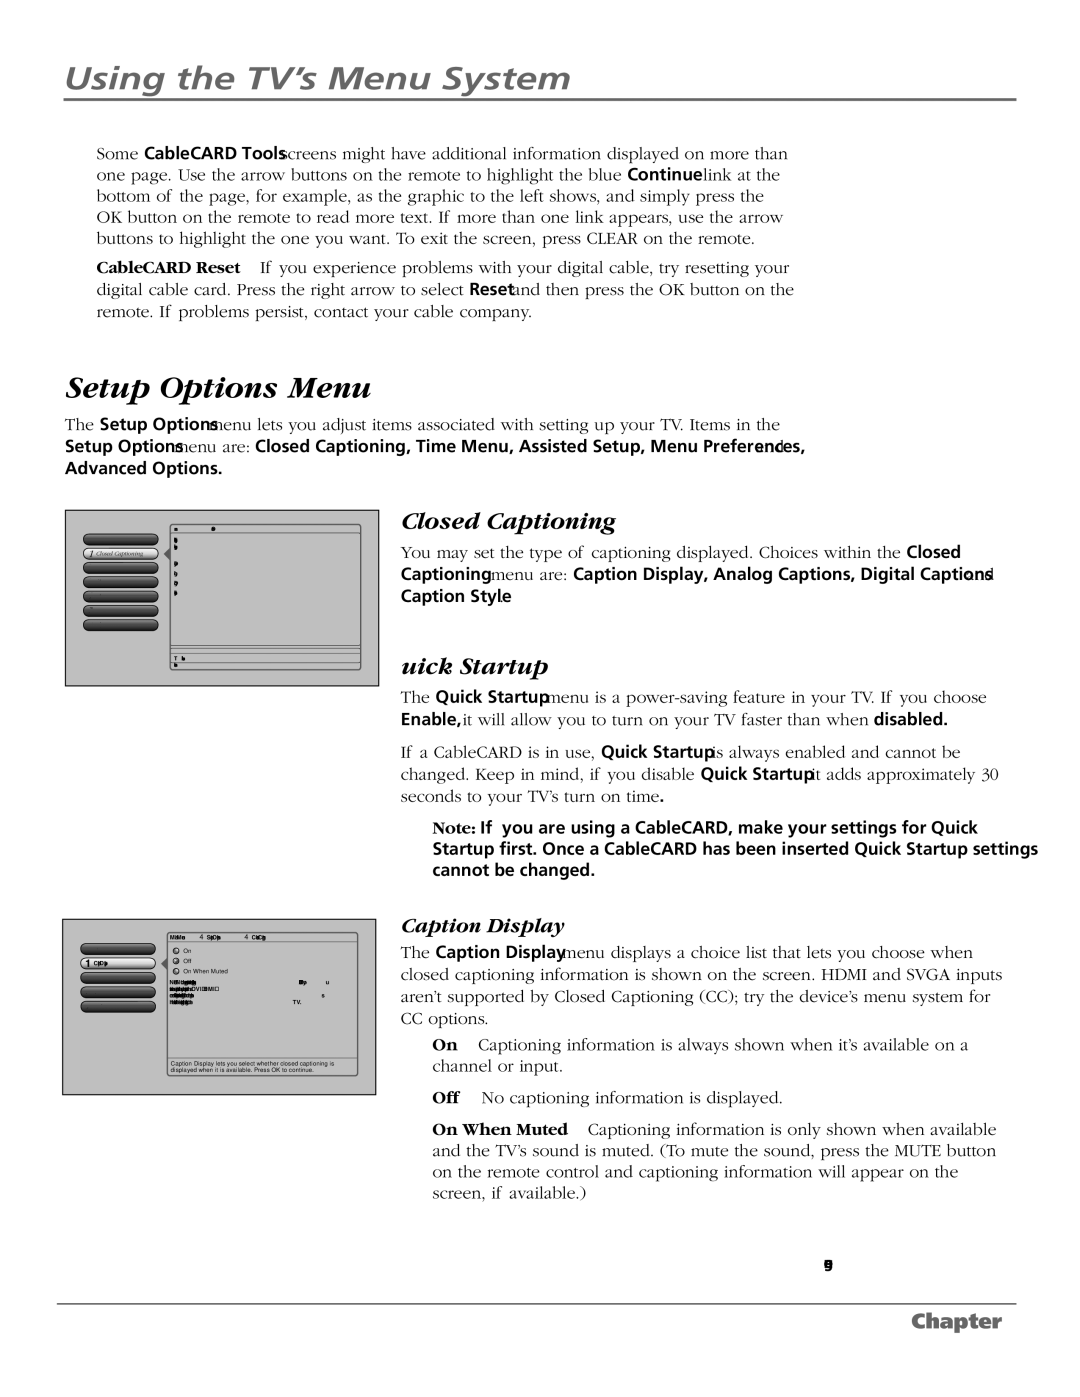 RCA M50WH187 manual Setup Options Menu, Closed Captioning, Quick Startup, Caption Display 